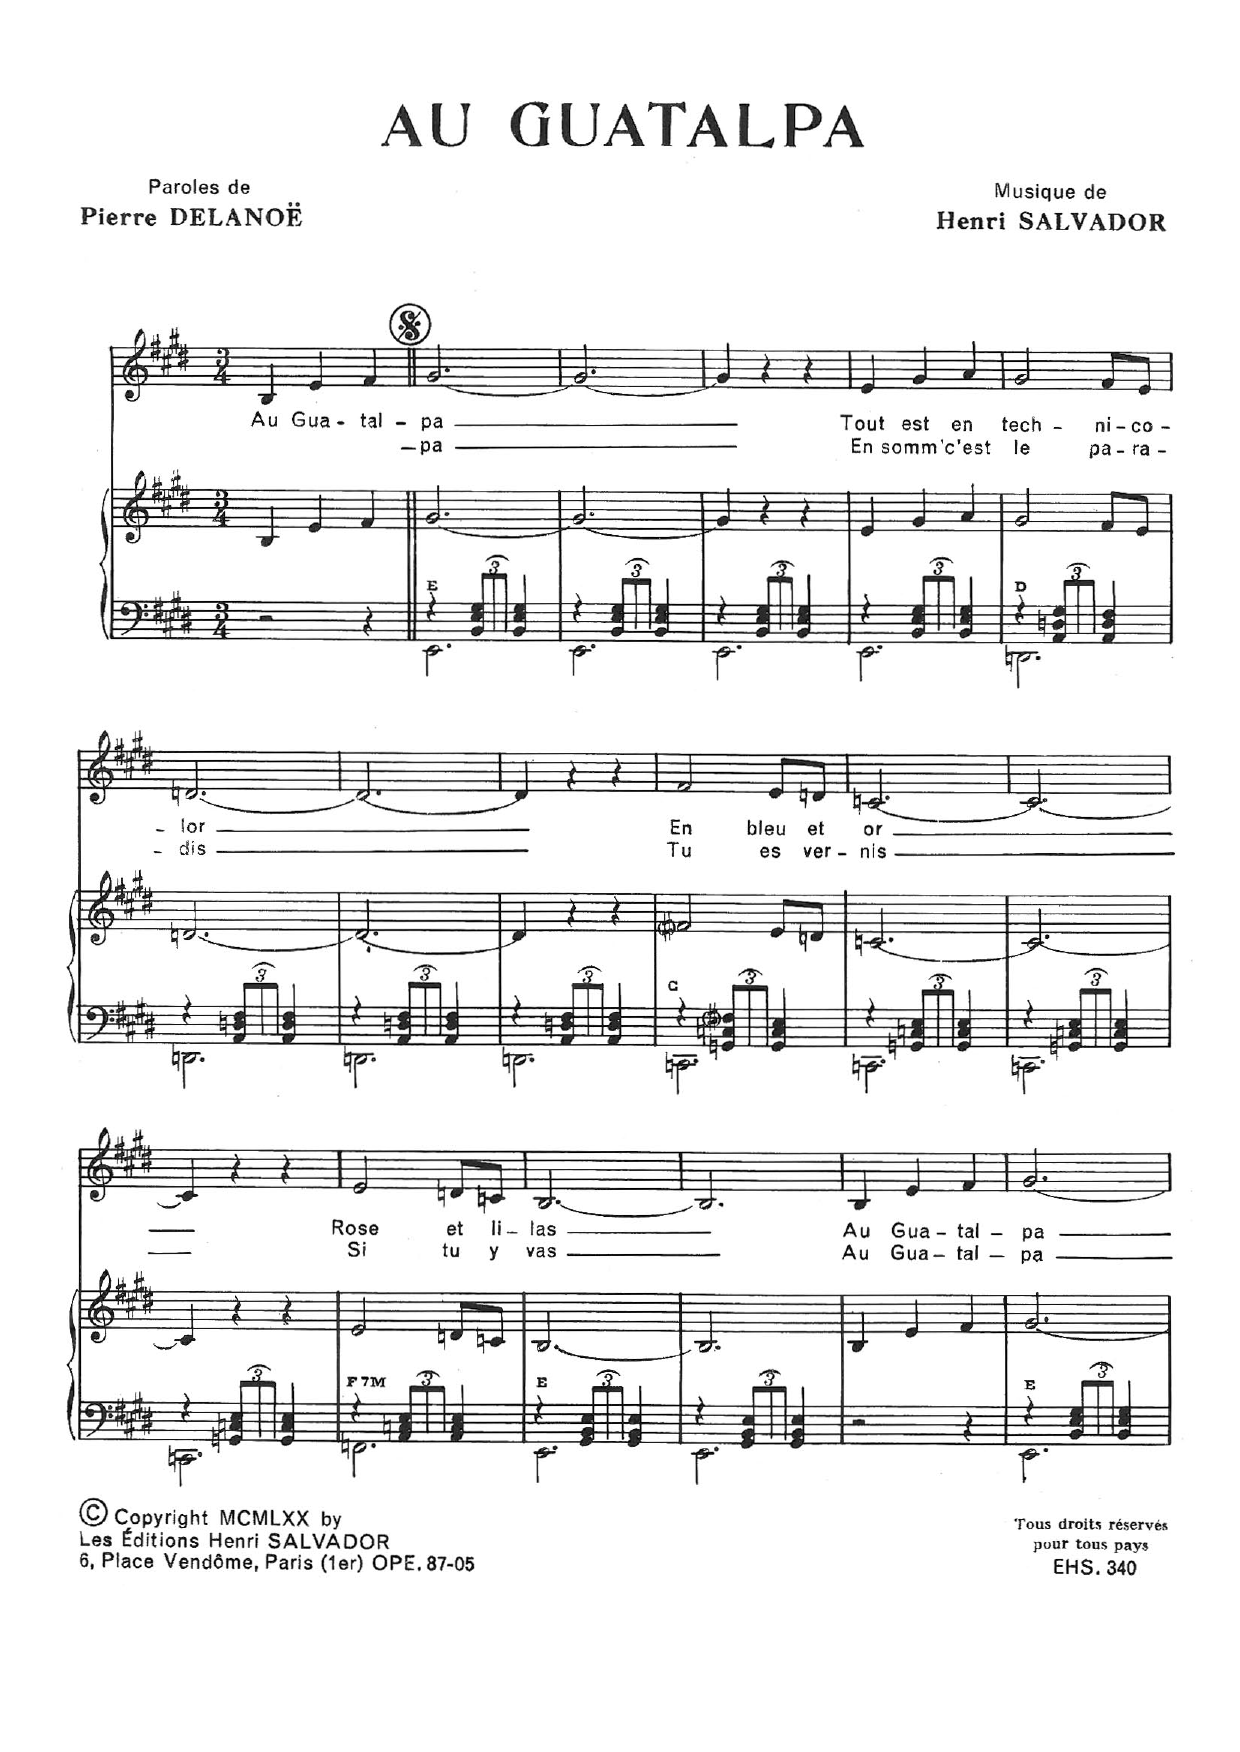 Henri Salvador Au Gatalpa Sheet Music Notes & Chords for Piano & Vocal - Download or Print PDF